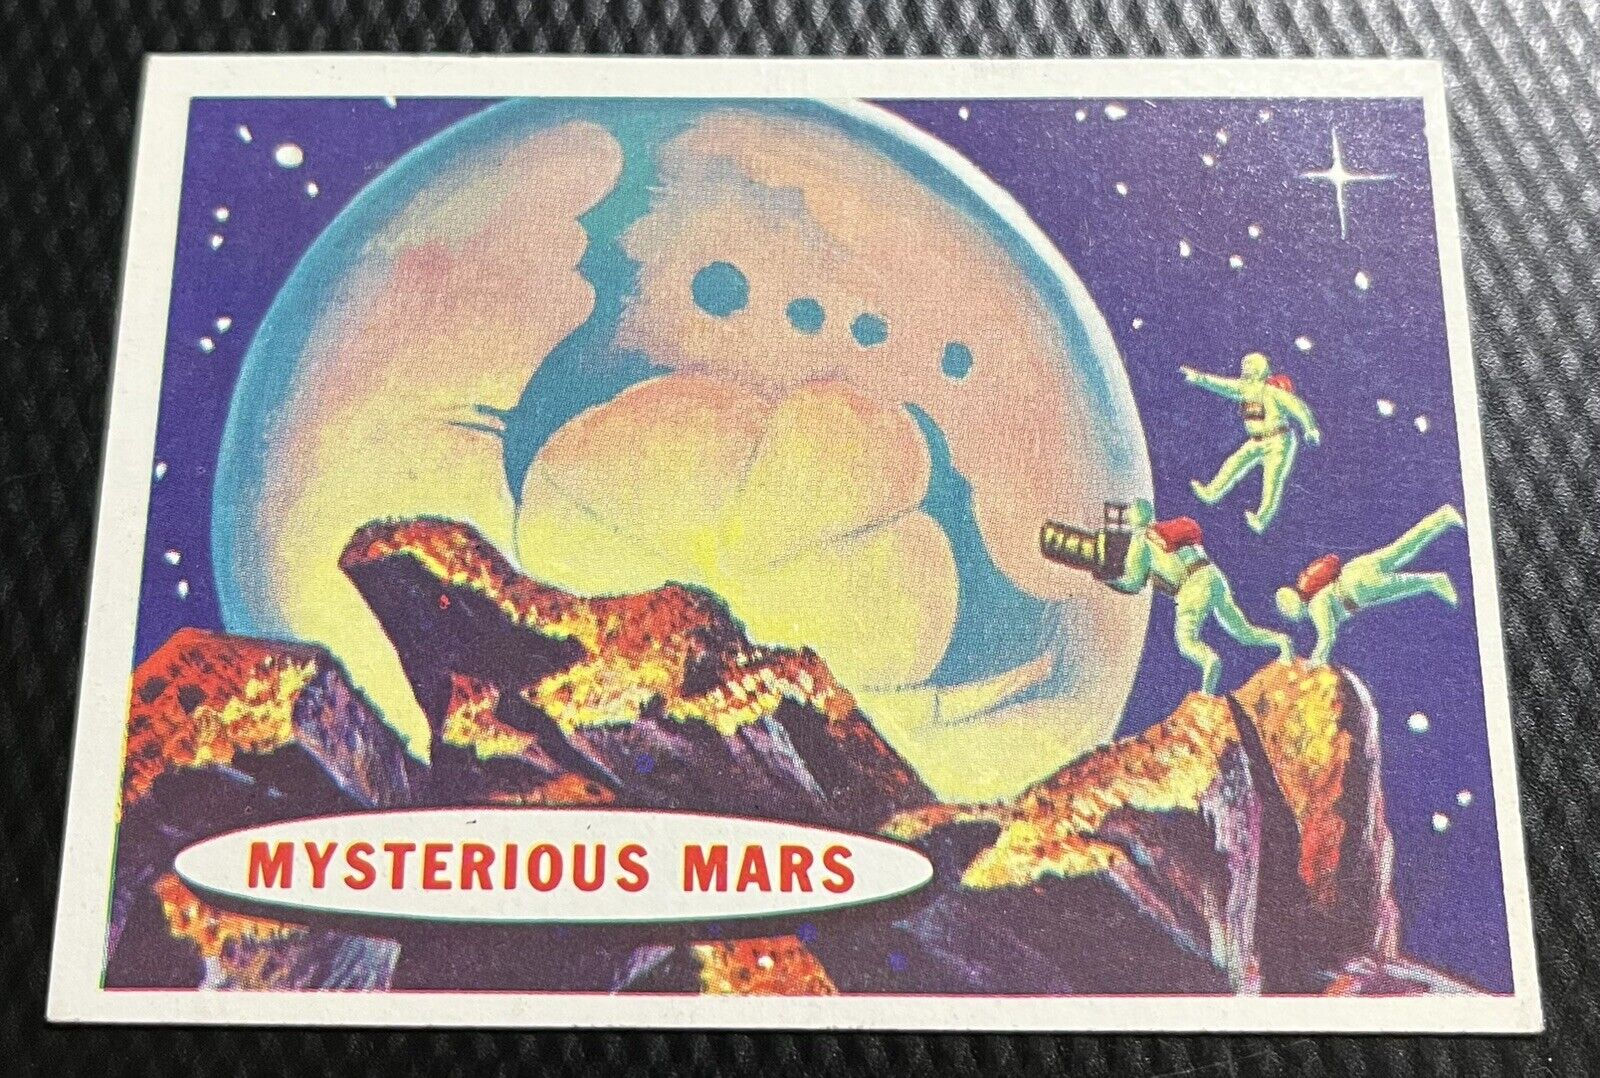 1958 Topps Target Moon Hi-Grade Card #72 - Mysterious Mars - No Creases - Nice